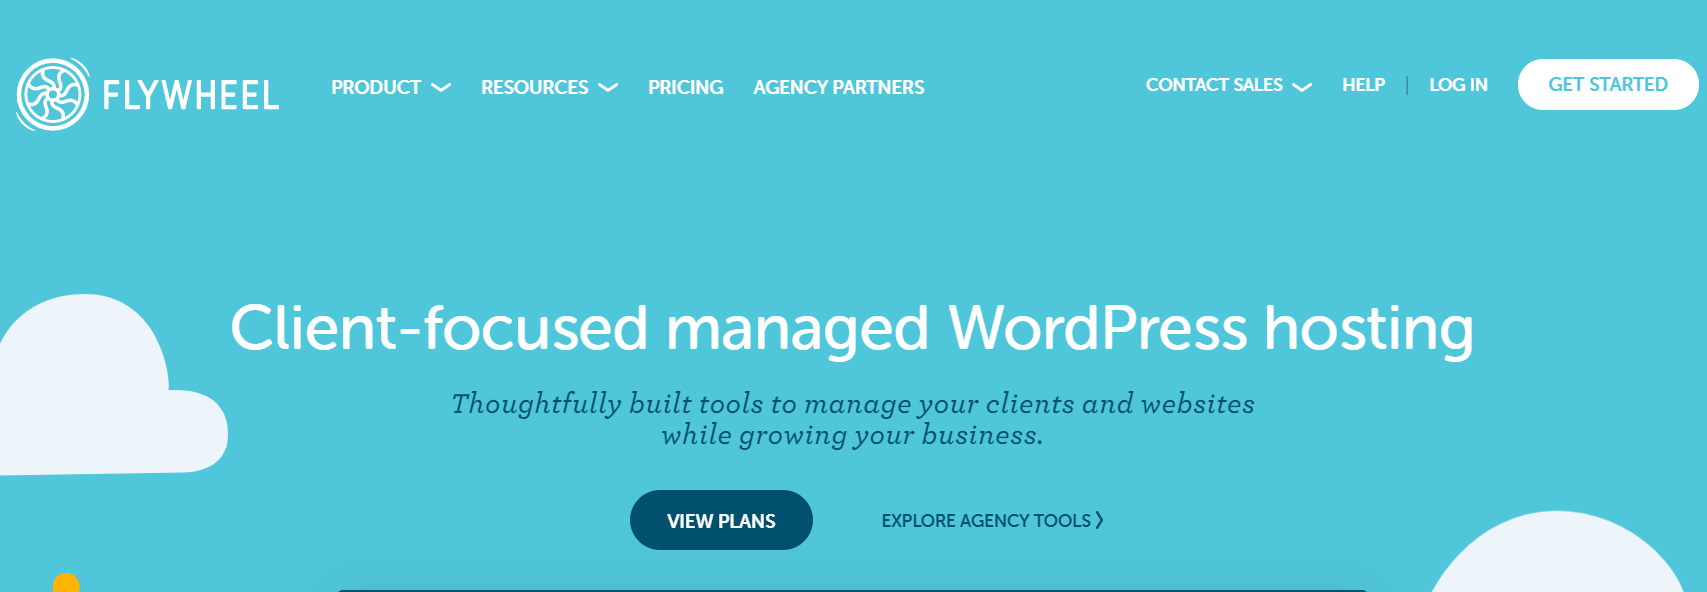 WordPress managed hosting 